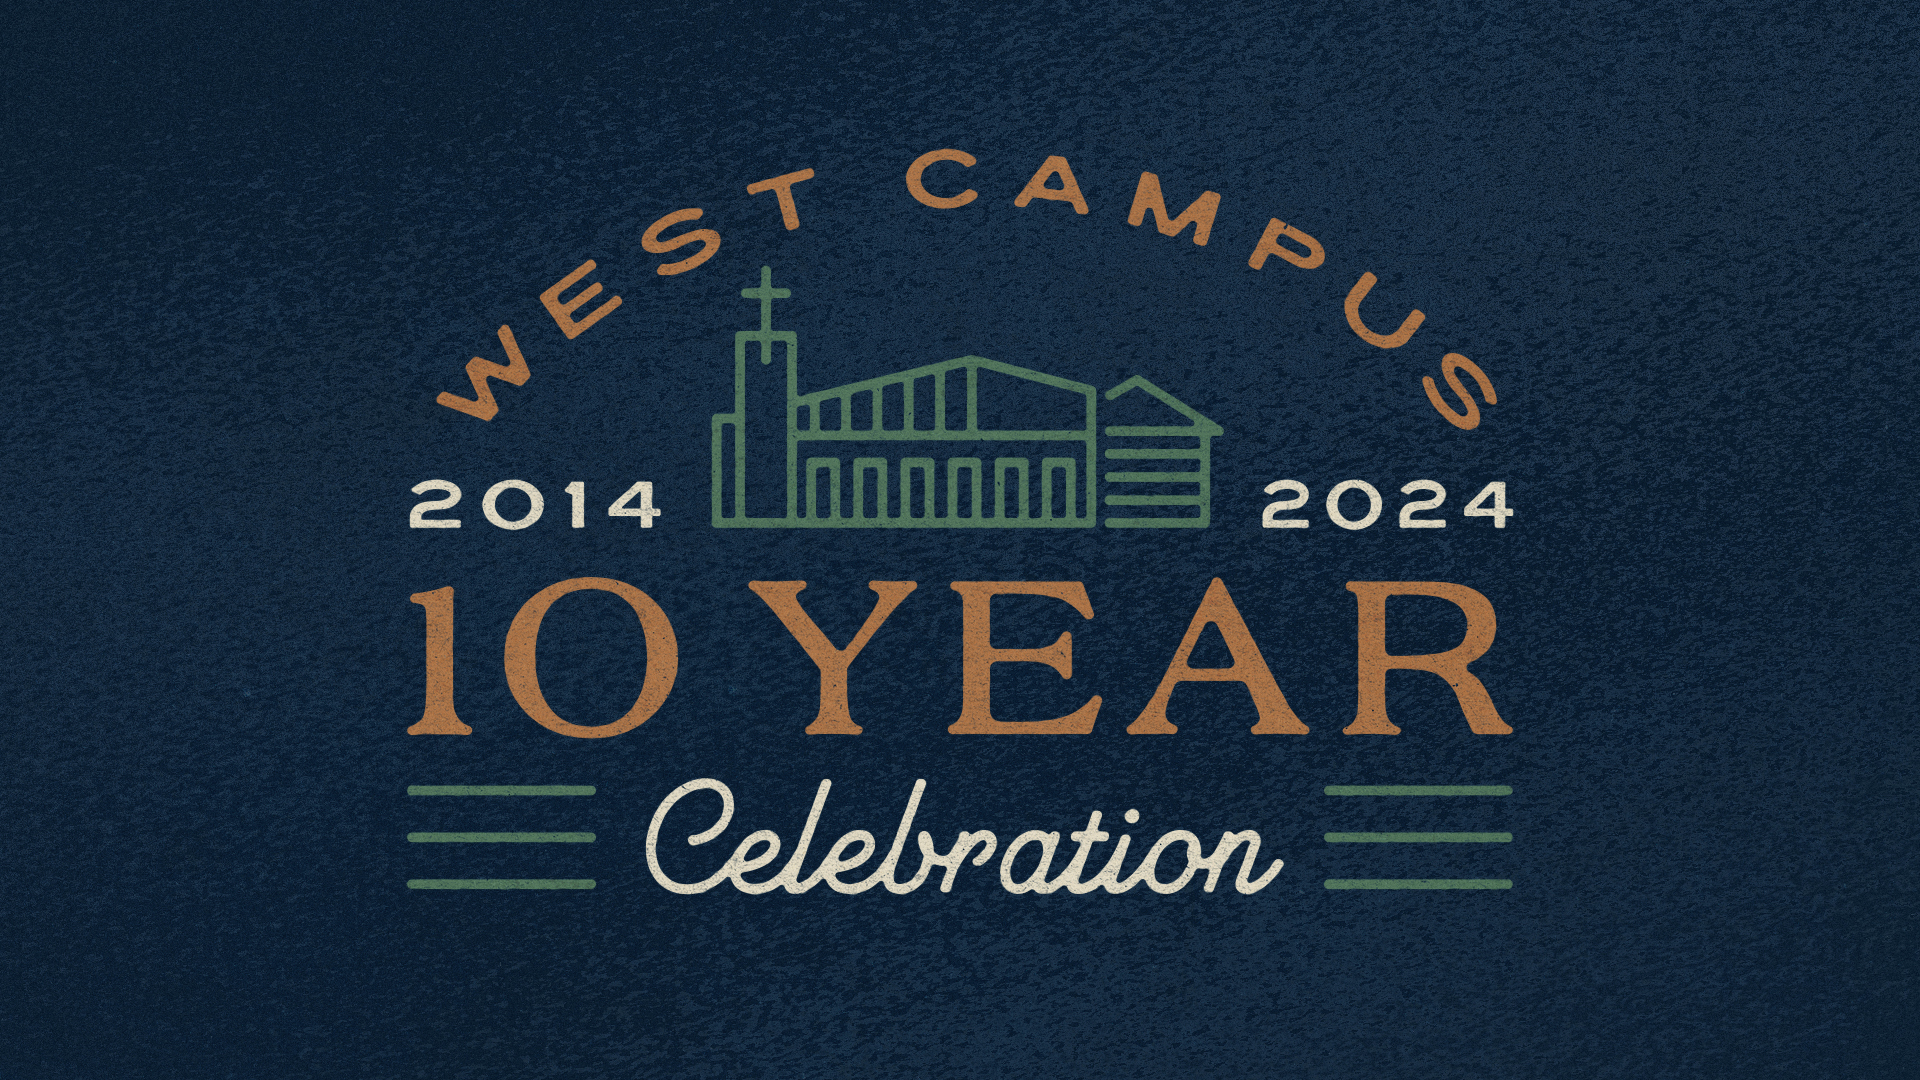 West Campus 10 Year Celebration